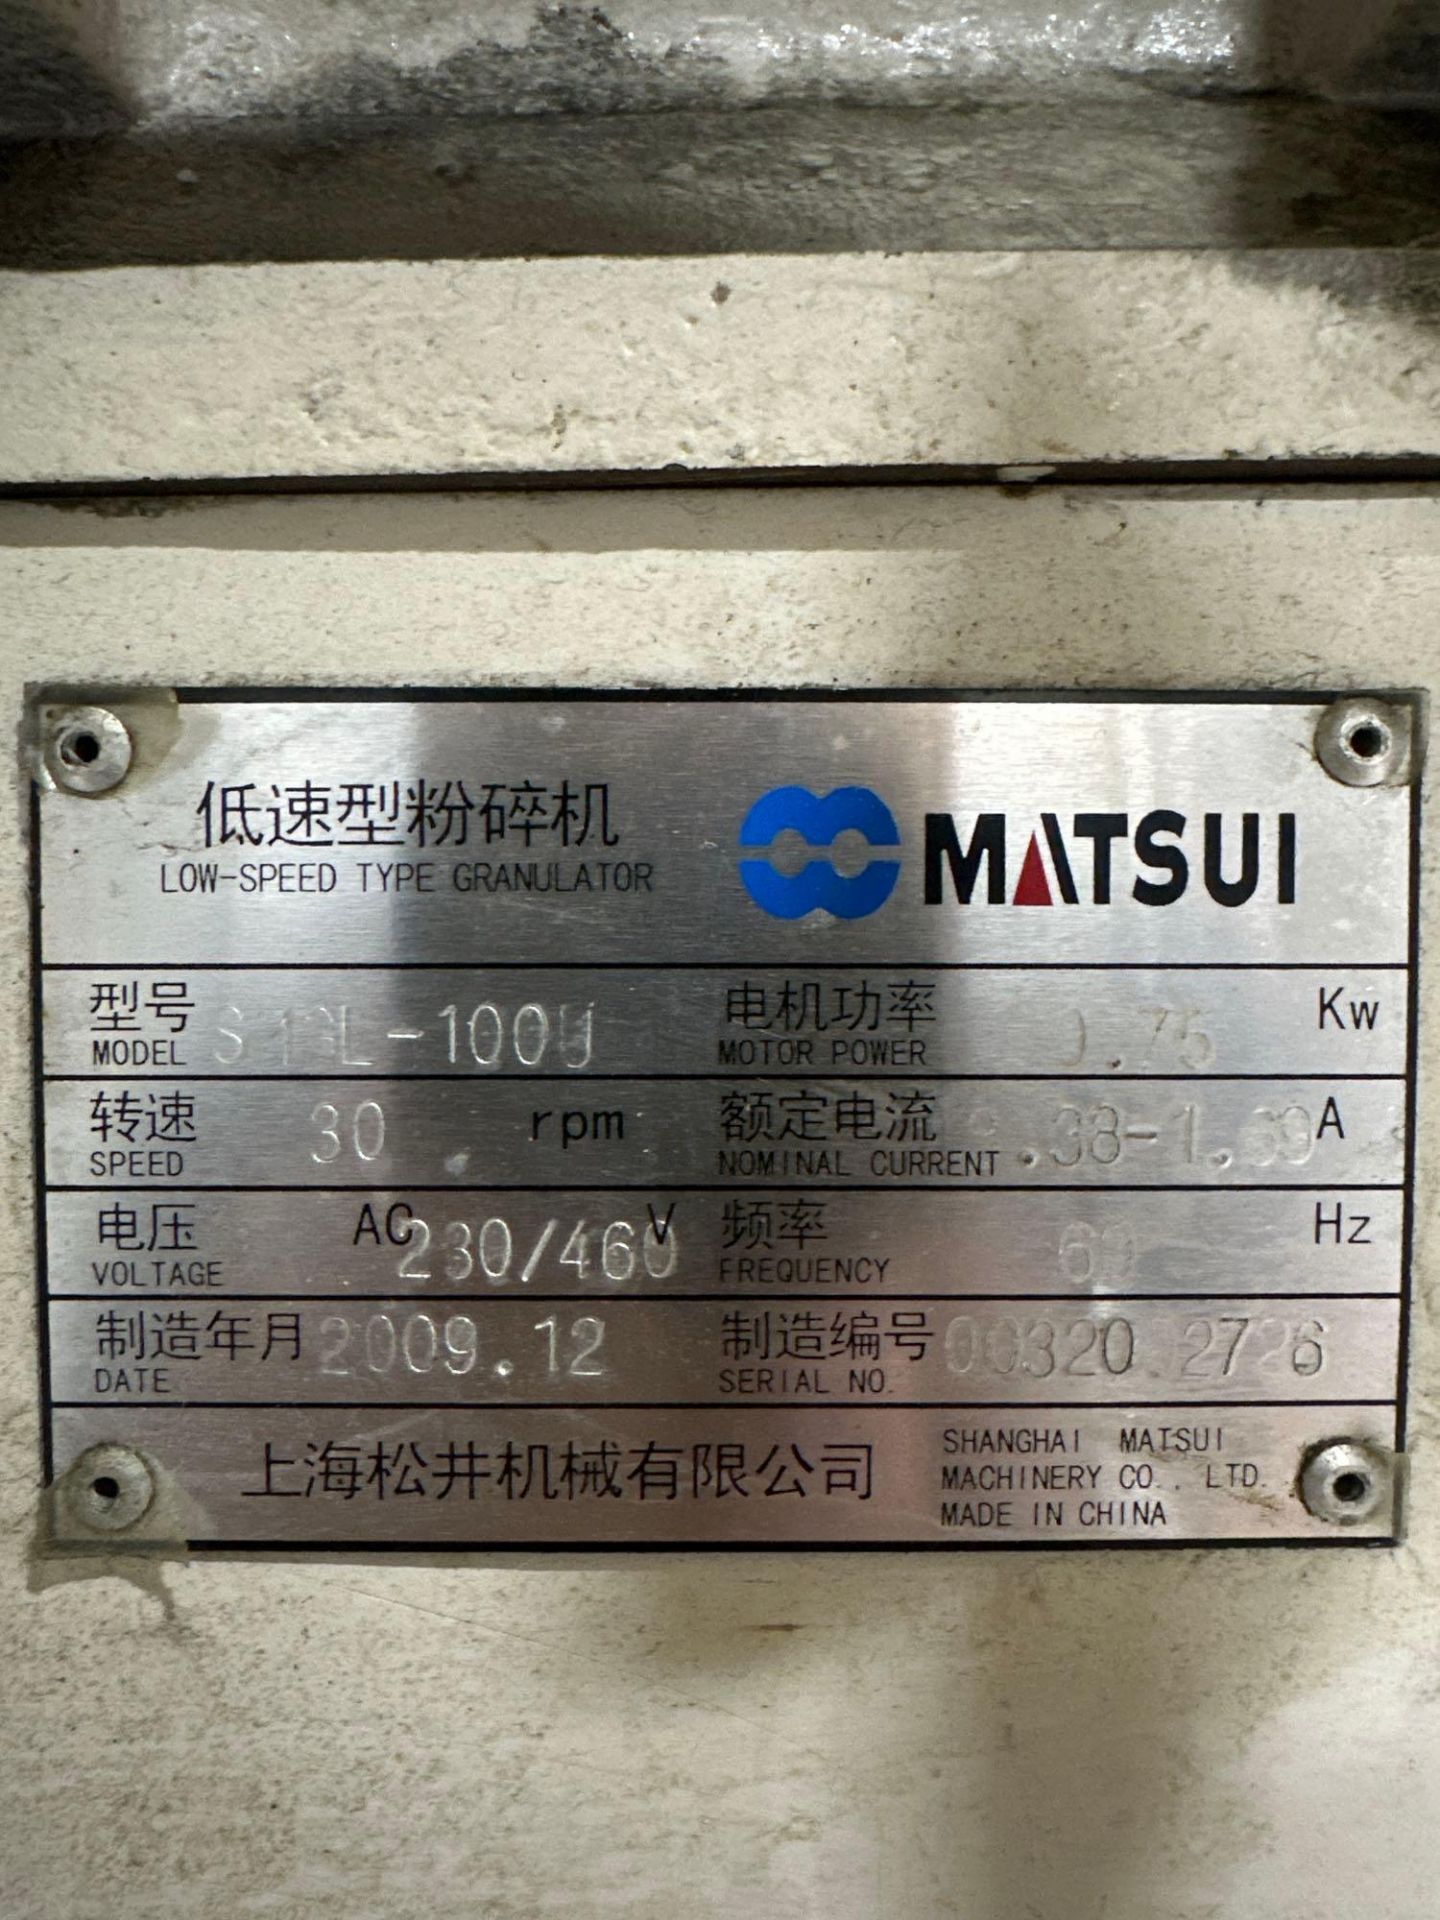 Matsui SL-100U Granulator, 30RPM, 230V, s/n 00320-2726, 2009 - Image 6 of 6